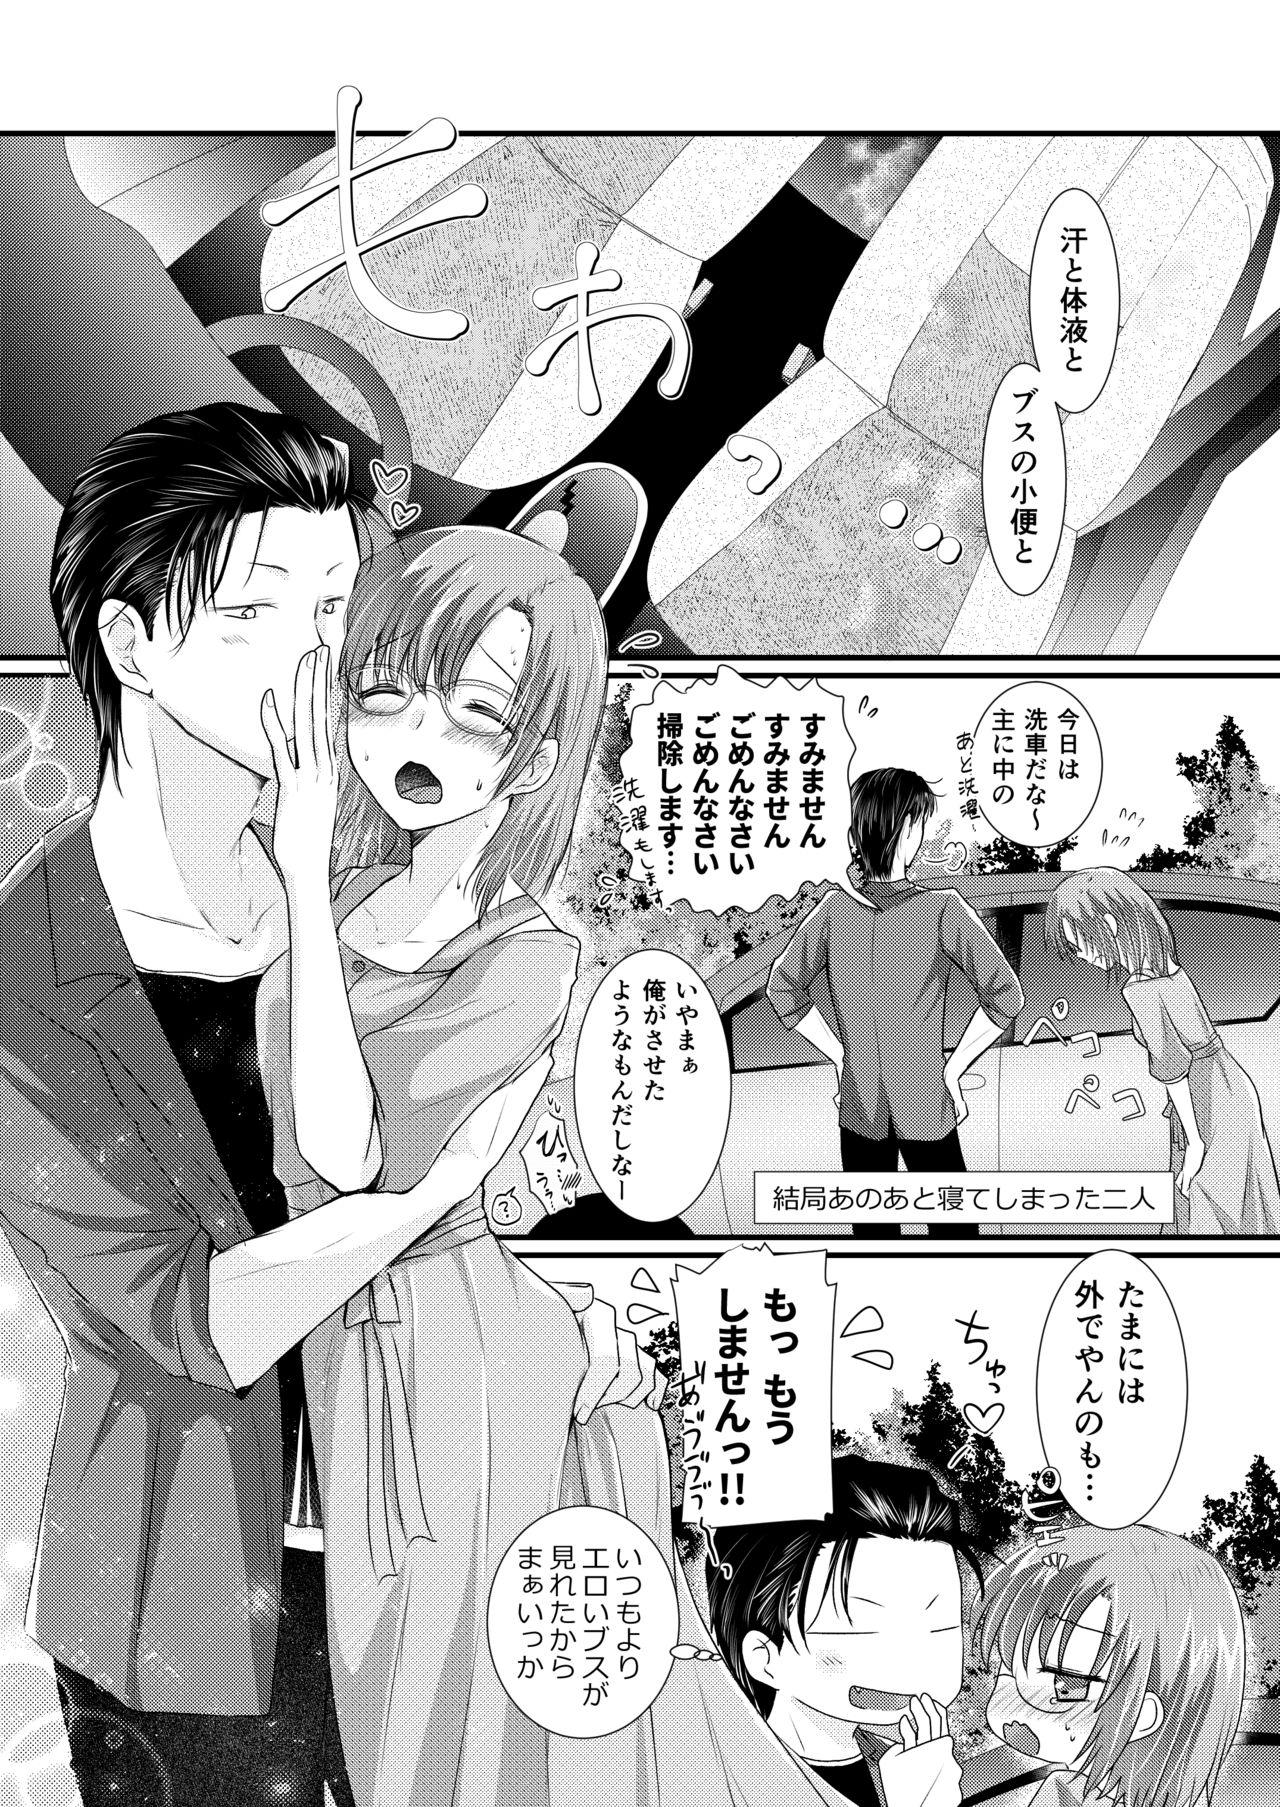 Seijin Muke Manga 16p 33